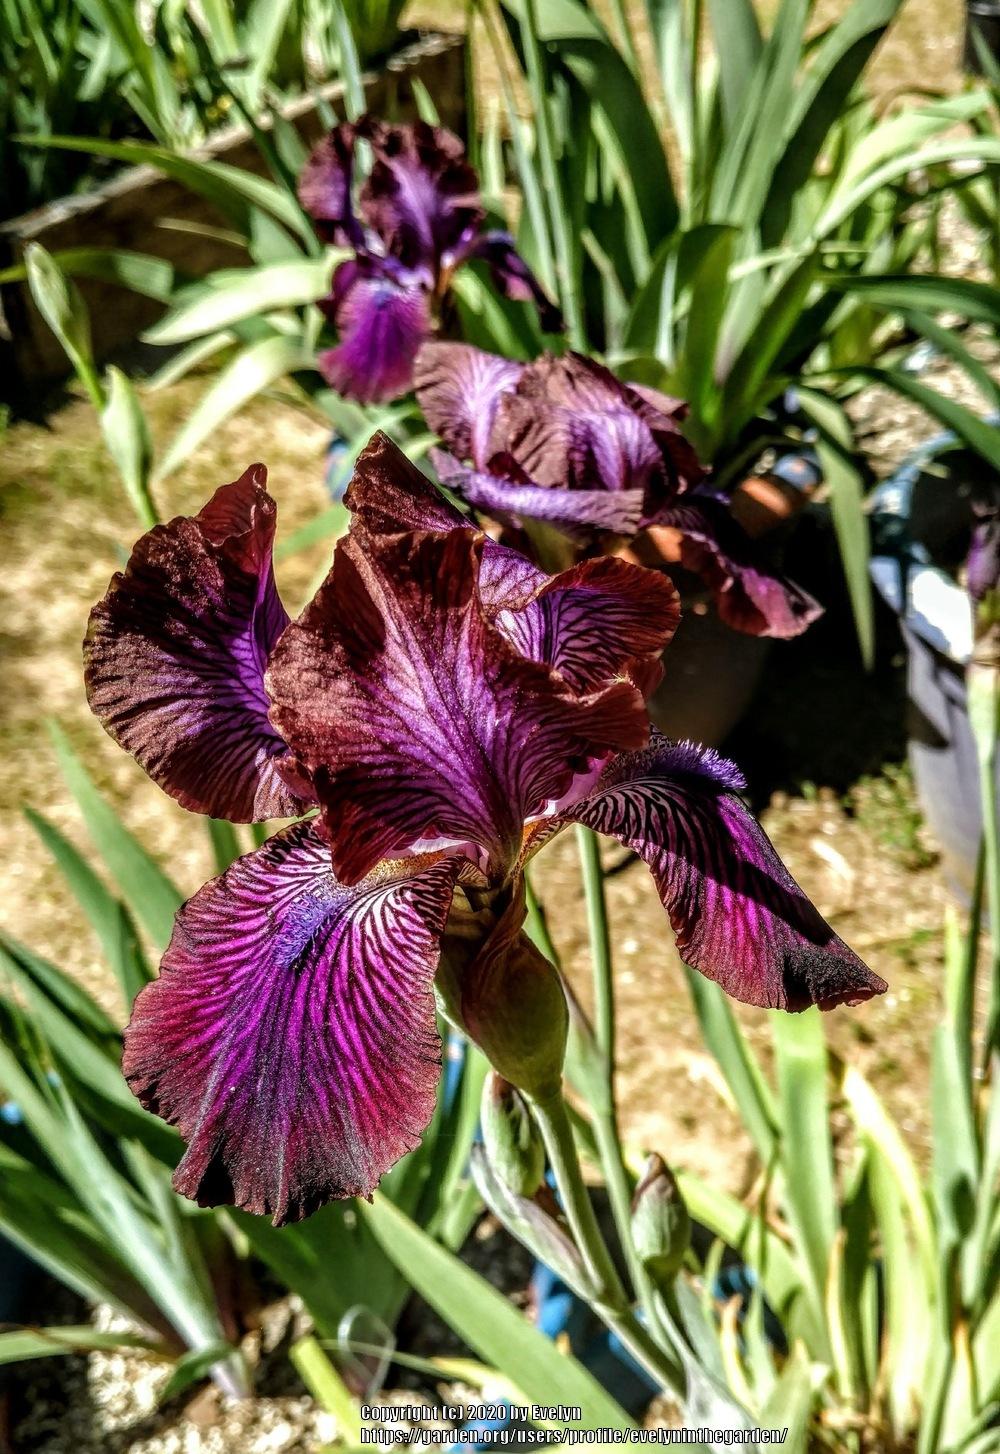 Photo of Arilbred Iris (Iris 'Afrosiab') uploaded by evelyninthegarden